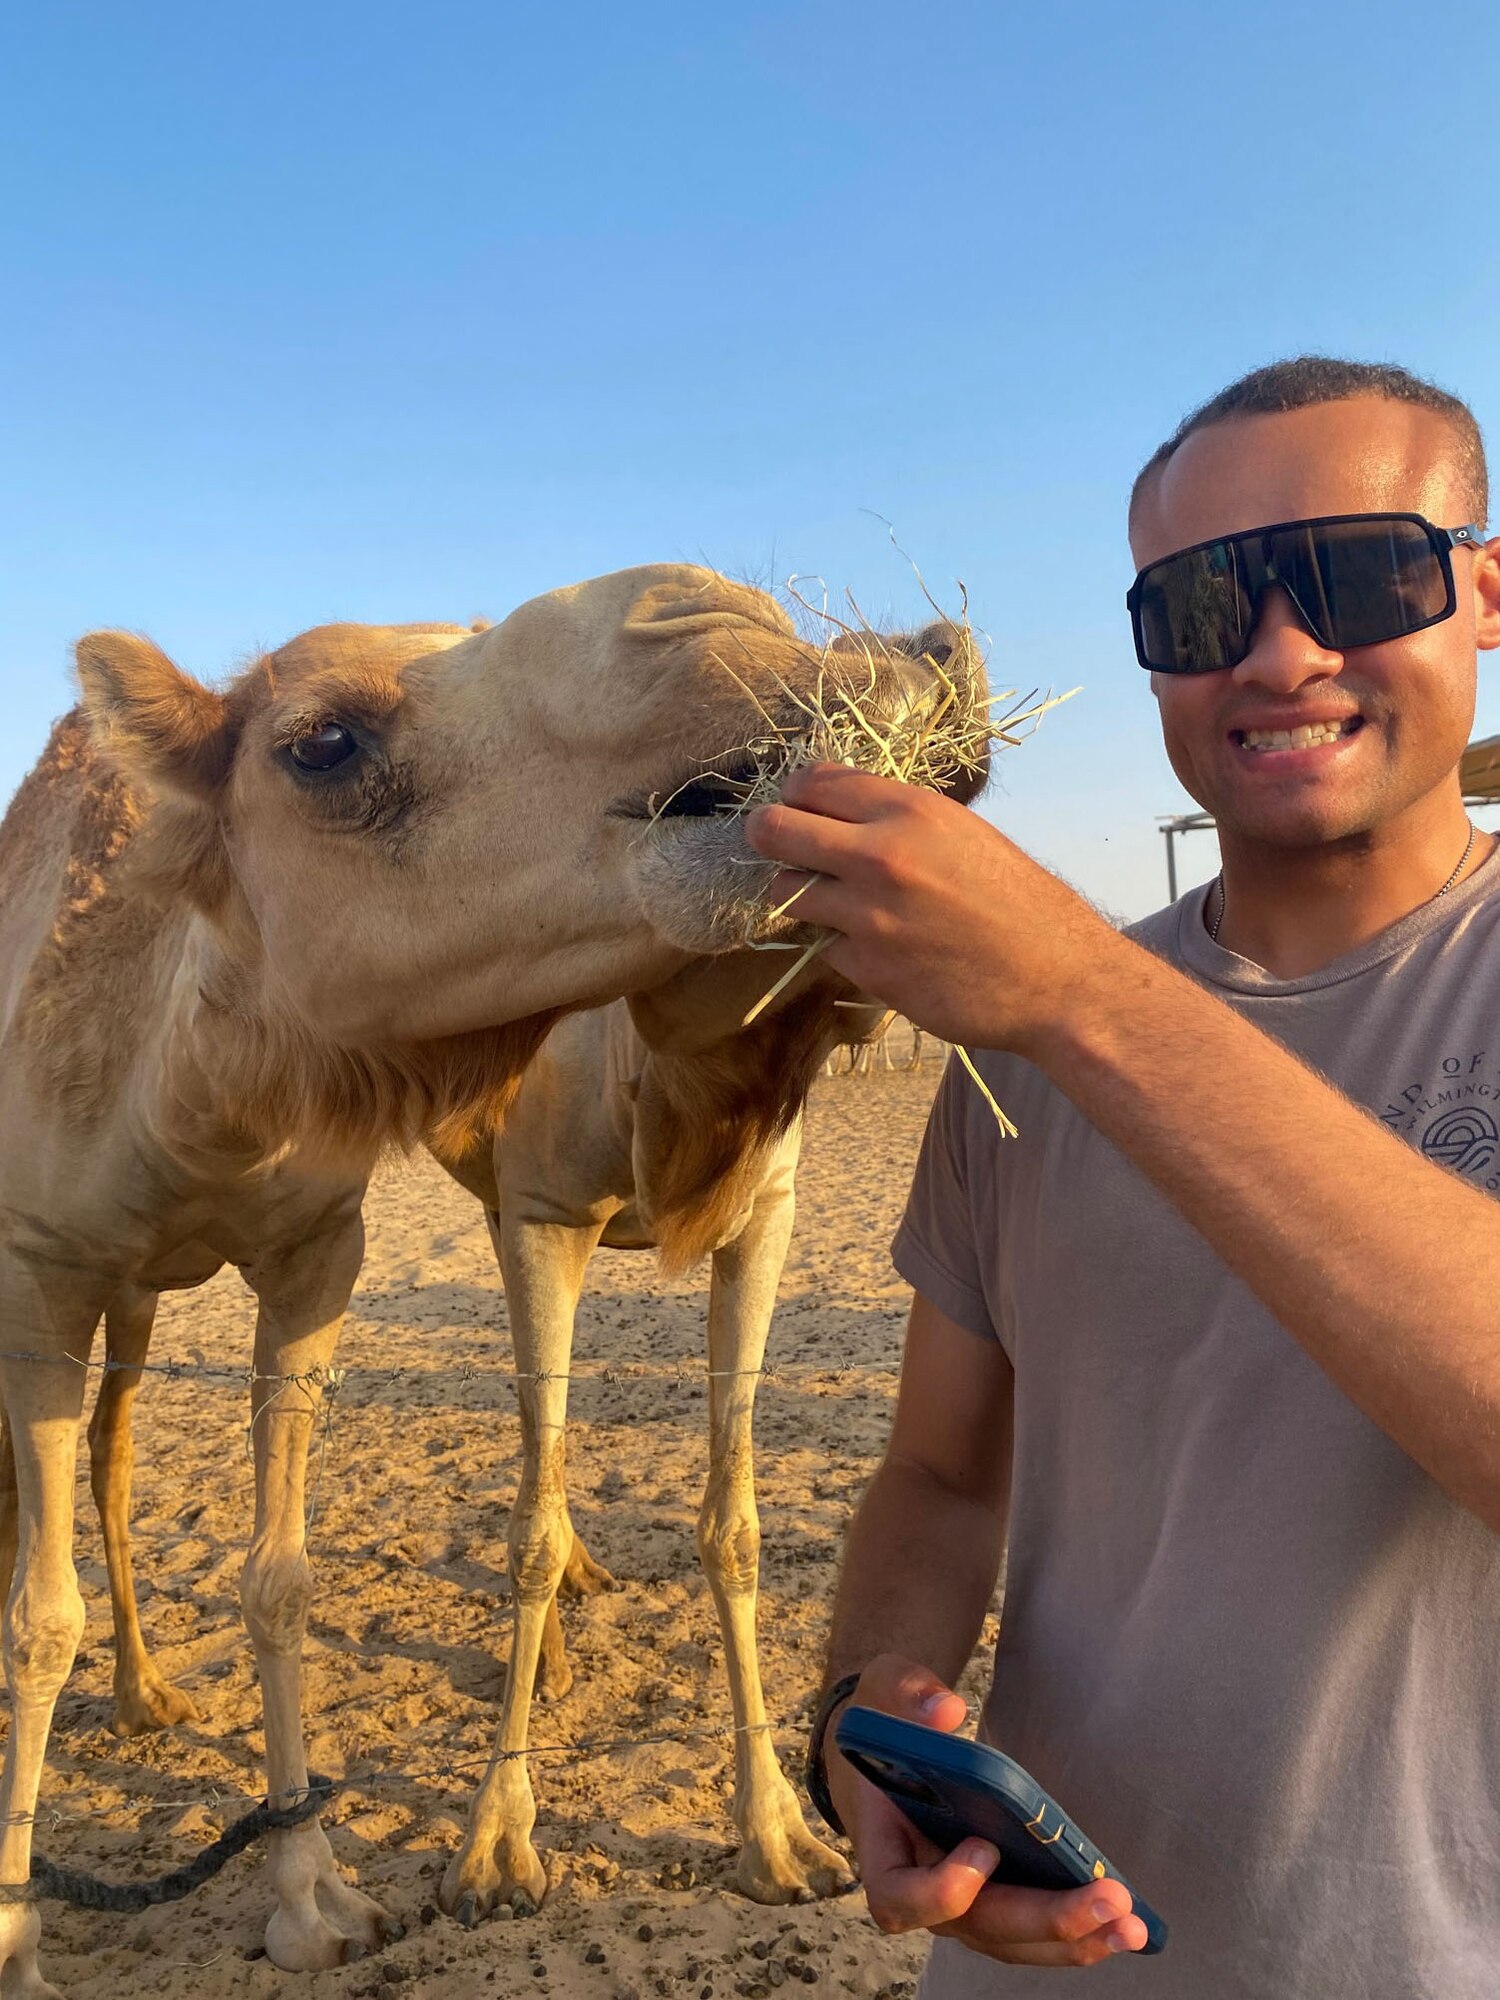 A photo of an Airman feeding a camel.